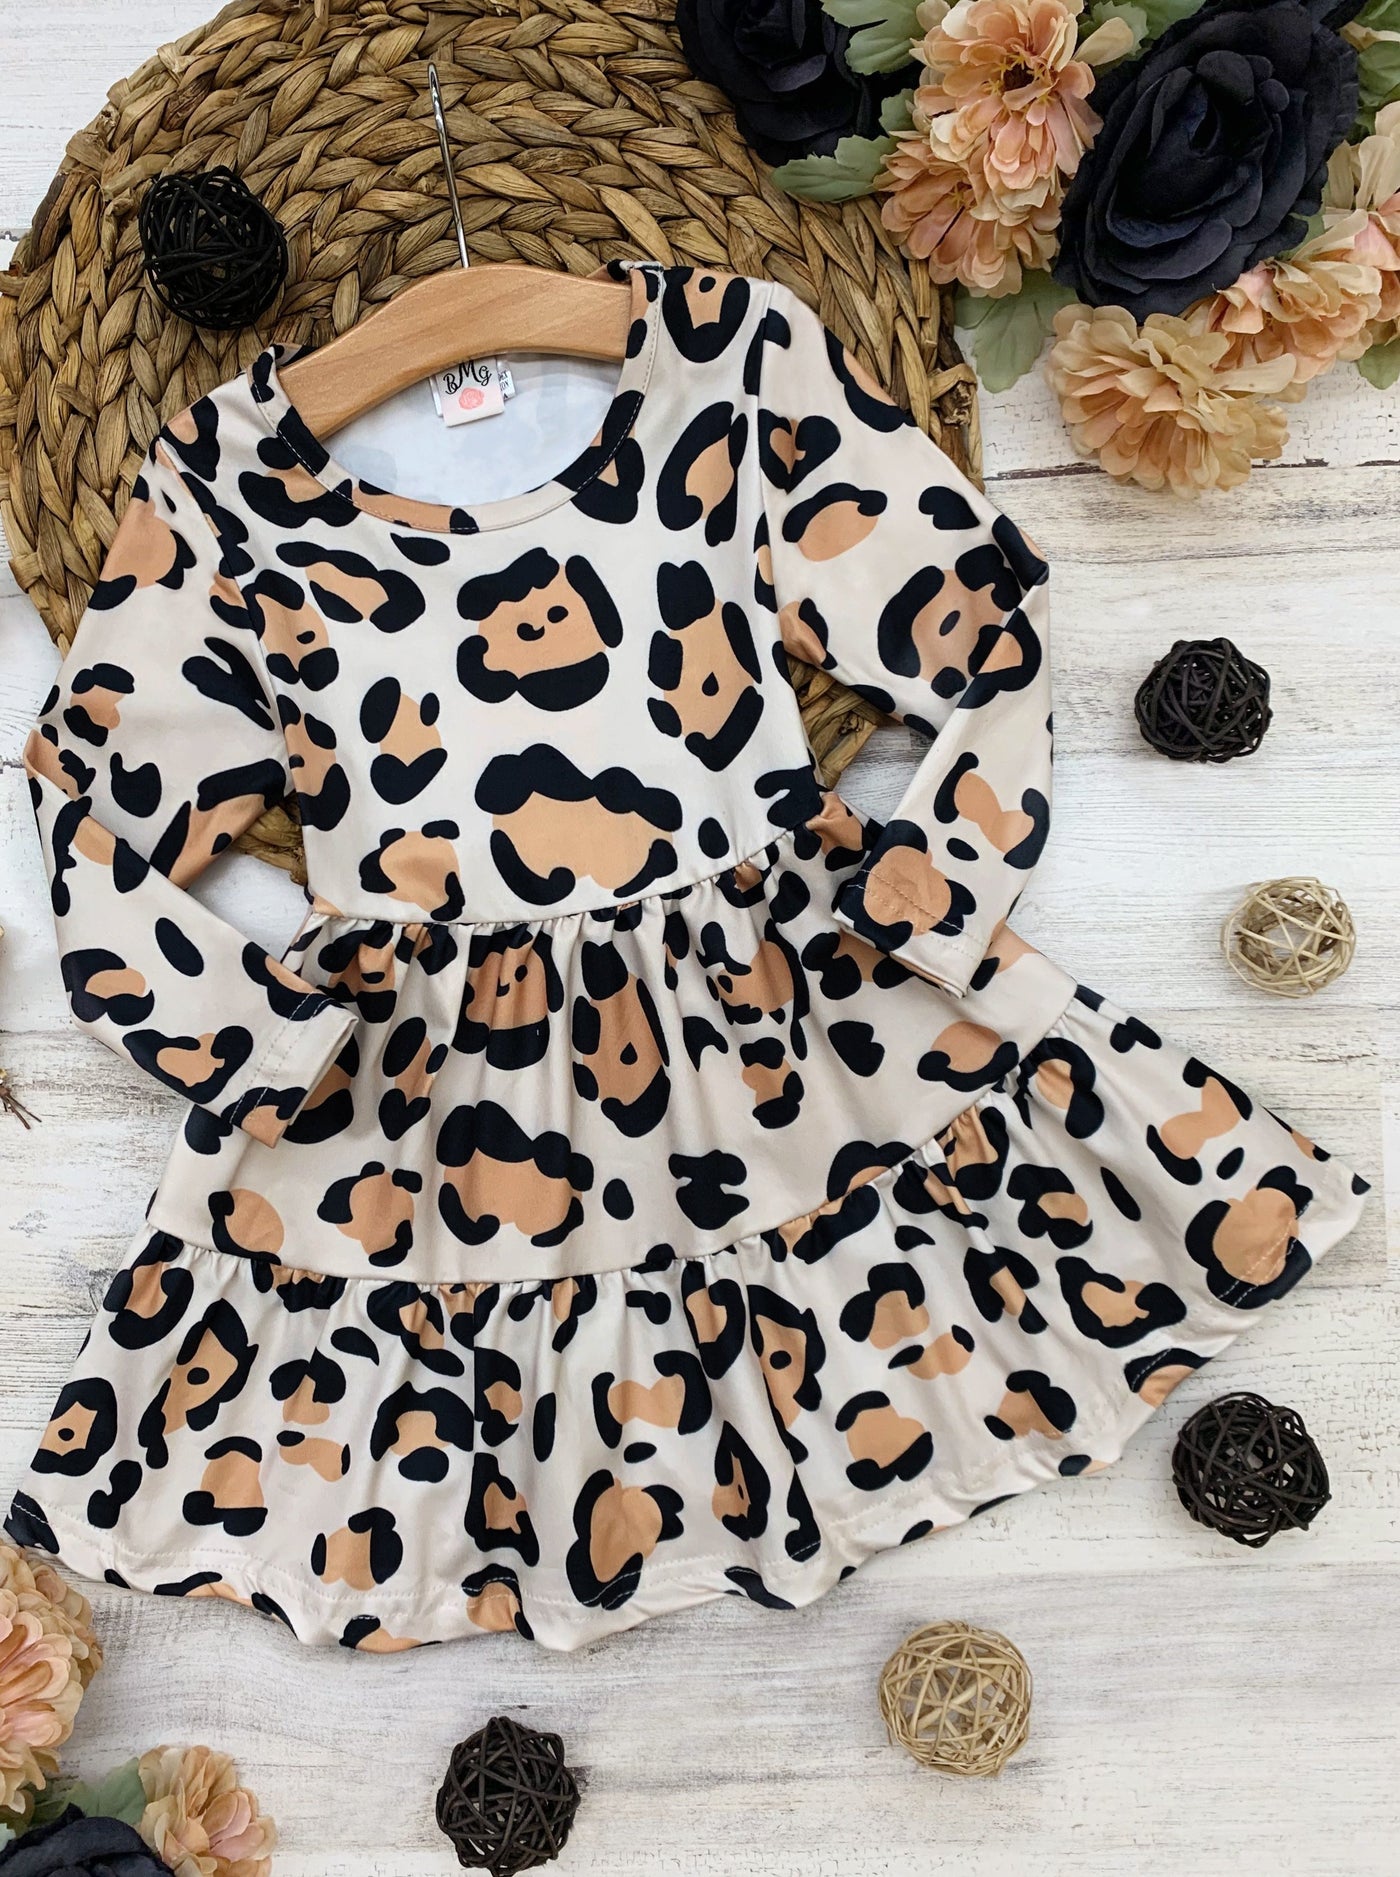 Girls Casual Fall Dresses | Leopard Print Long Sleeve Ruffle Dress 